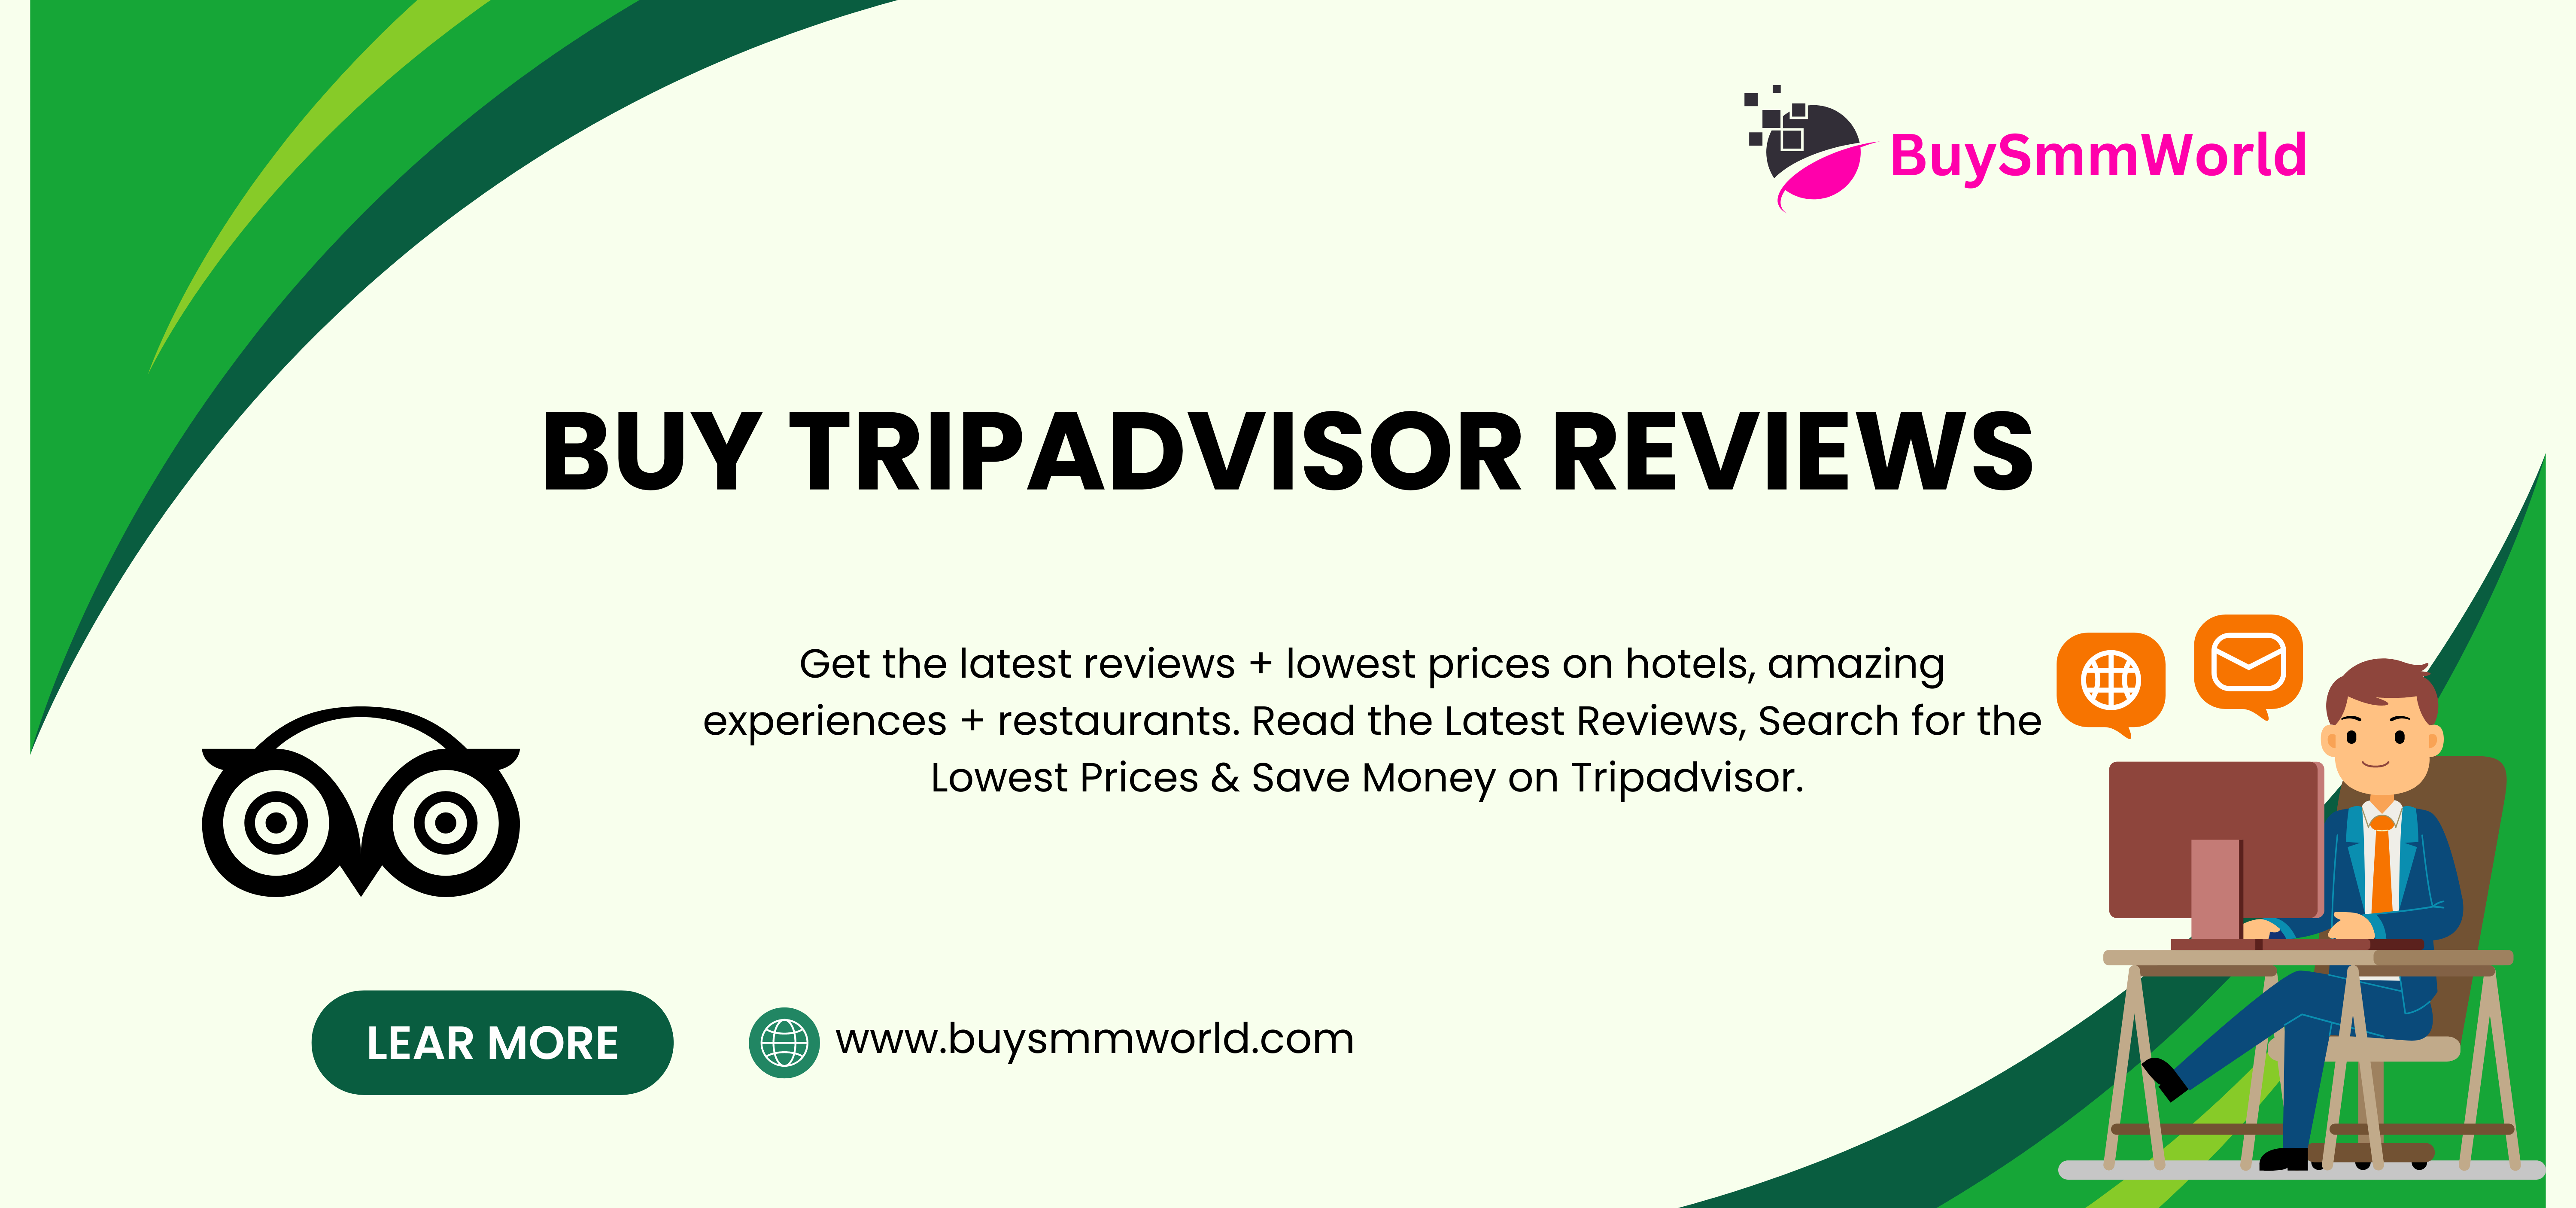 Buy TripAdvisor Reviews
